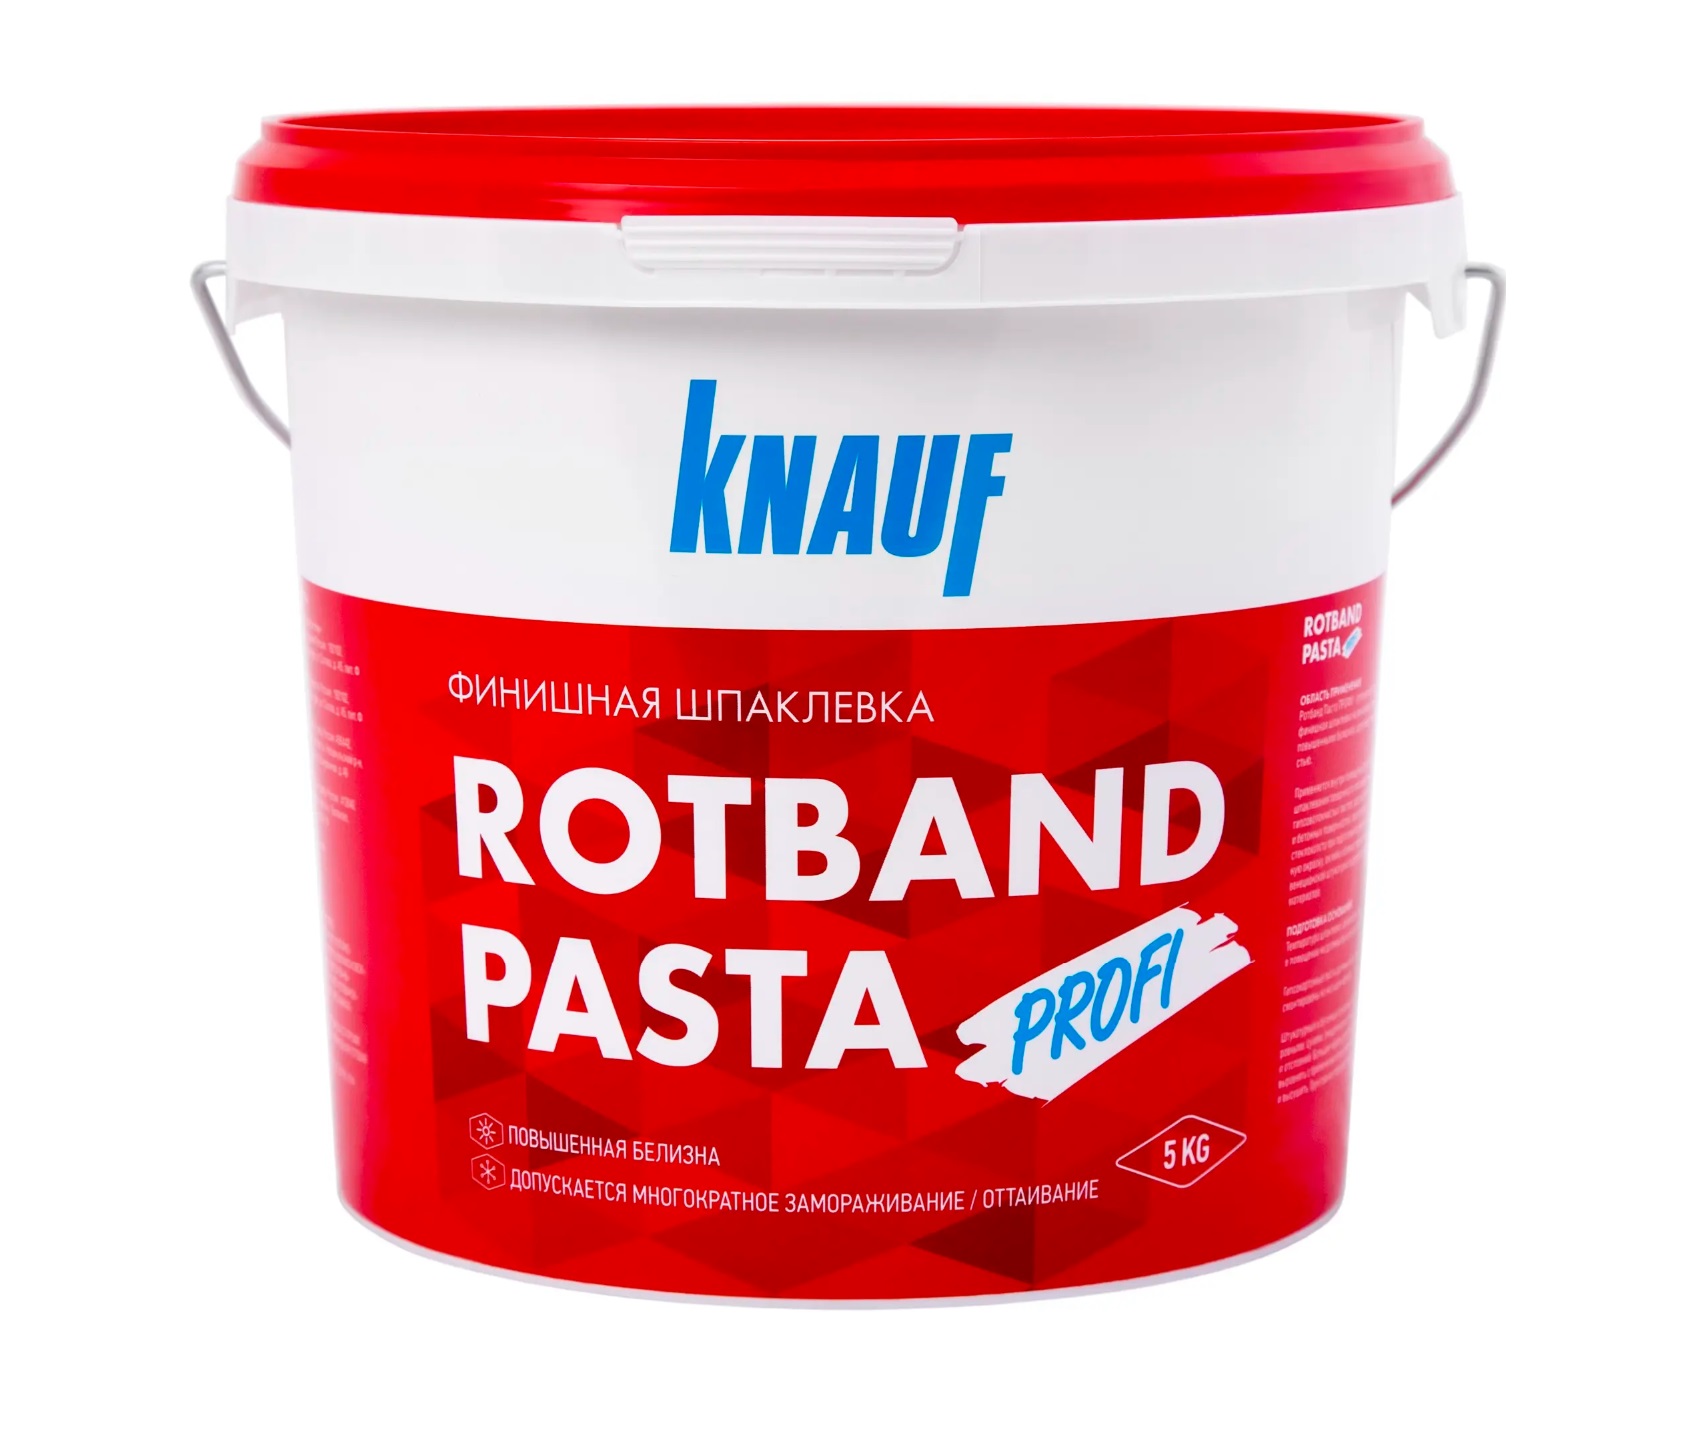 Шпатлевка финишная Ротбанд Паста Профи Кнауф (Knauf) 5 кг